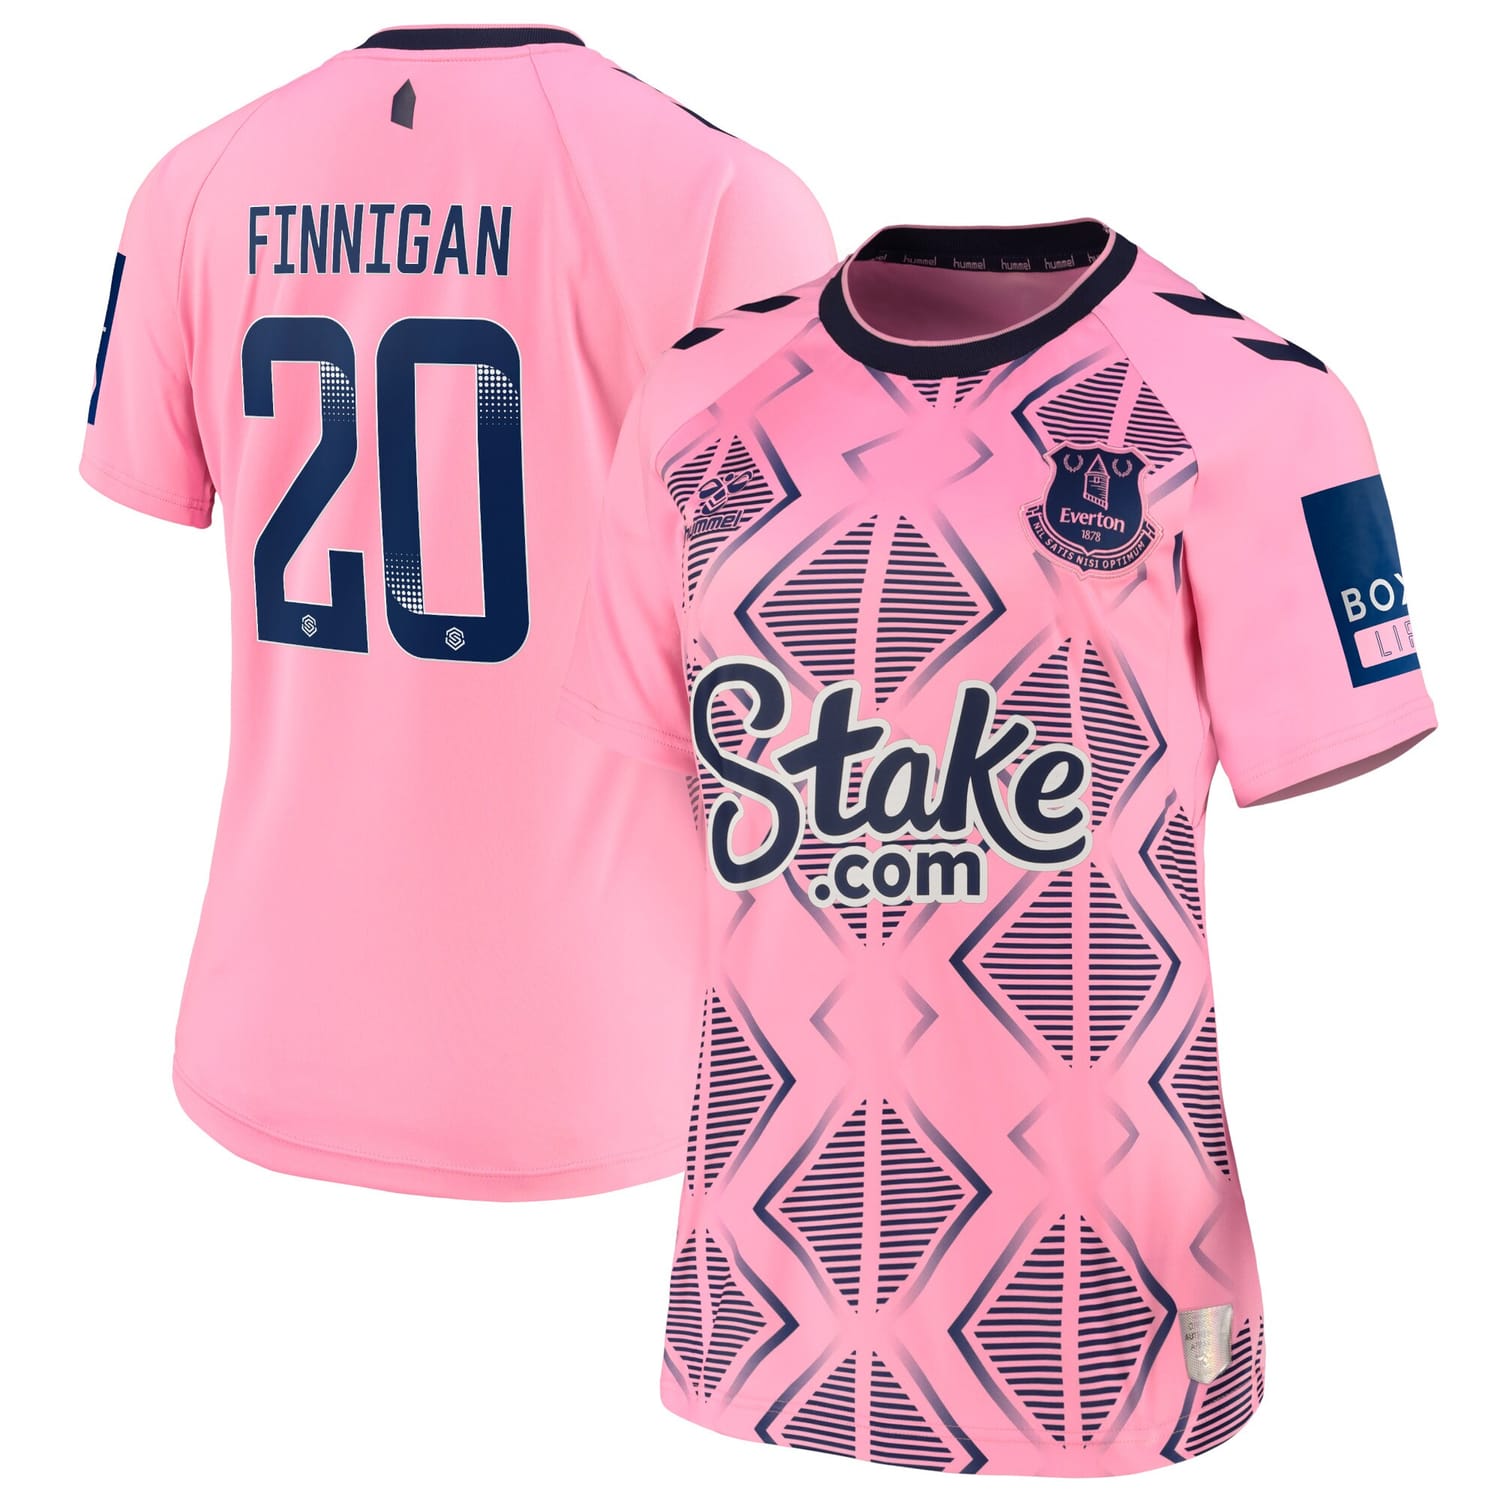 Premier League Everton Away Jersey Shirt 2022-23 player Megan Finnigan 20 printing for Women